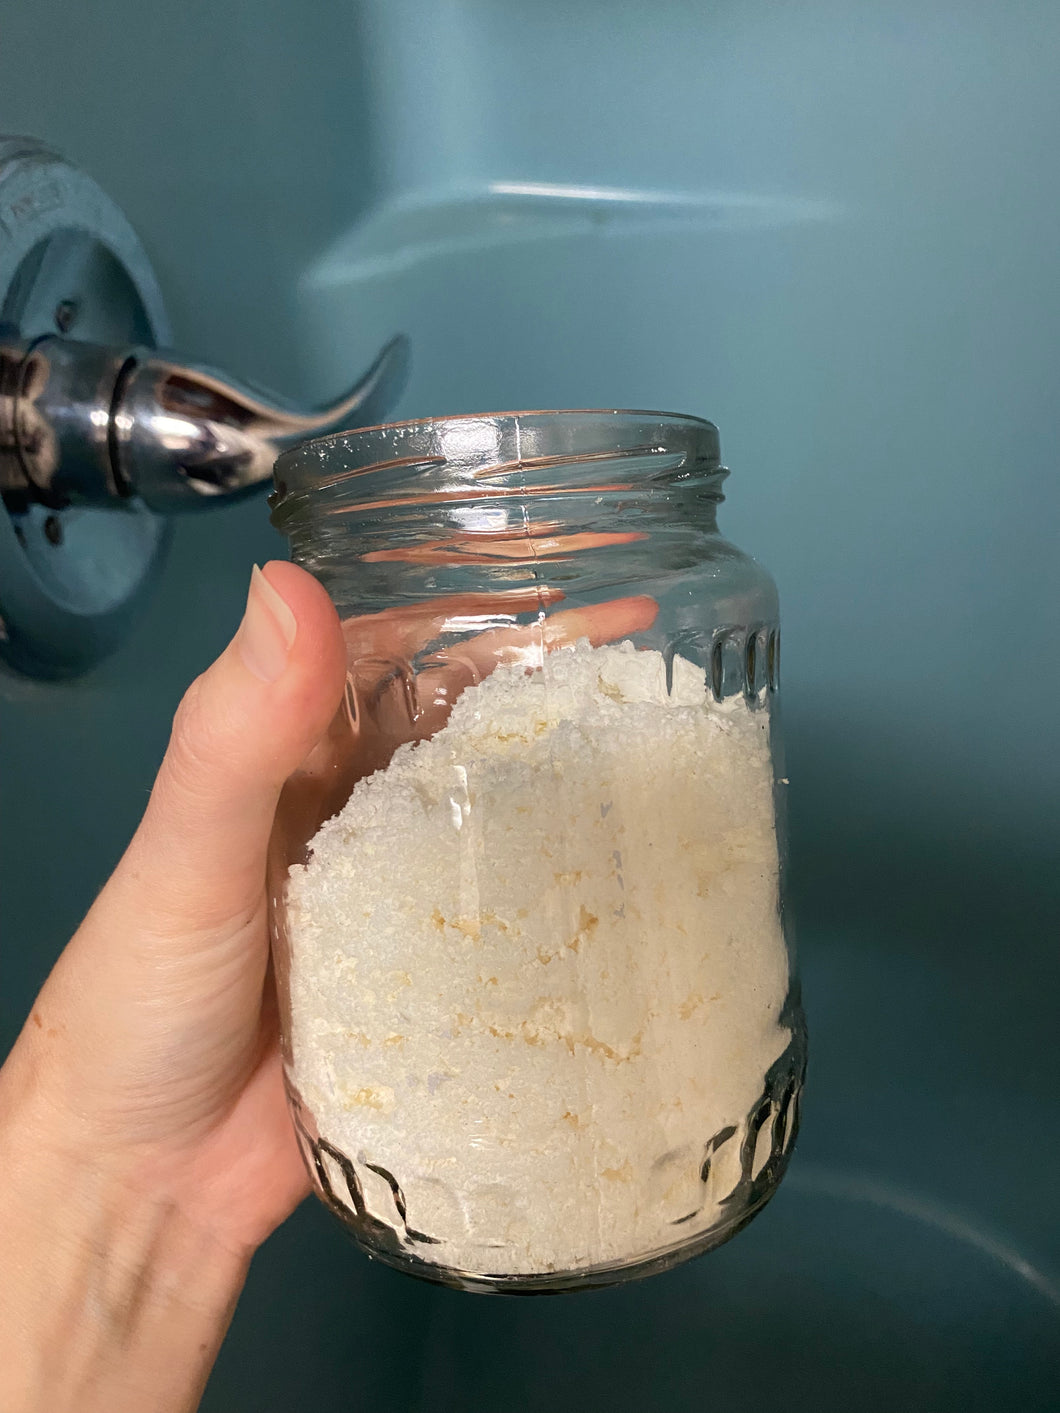 Foaming Bath Salts